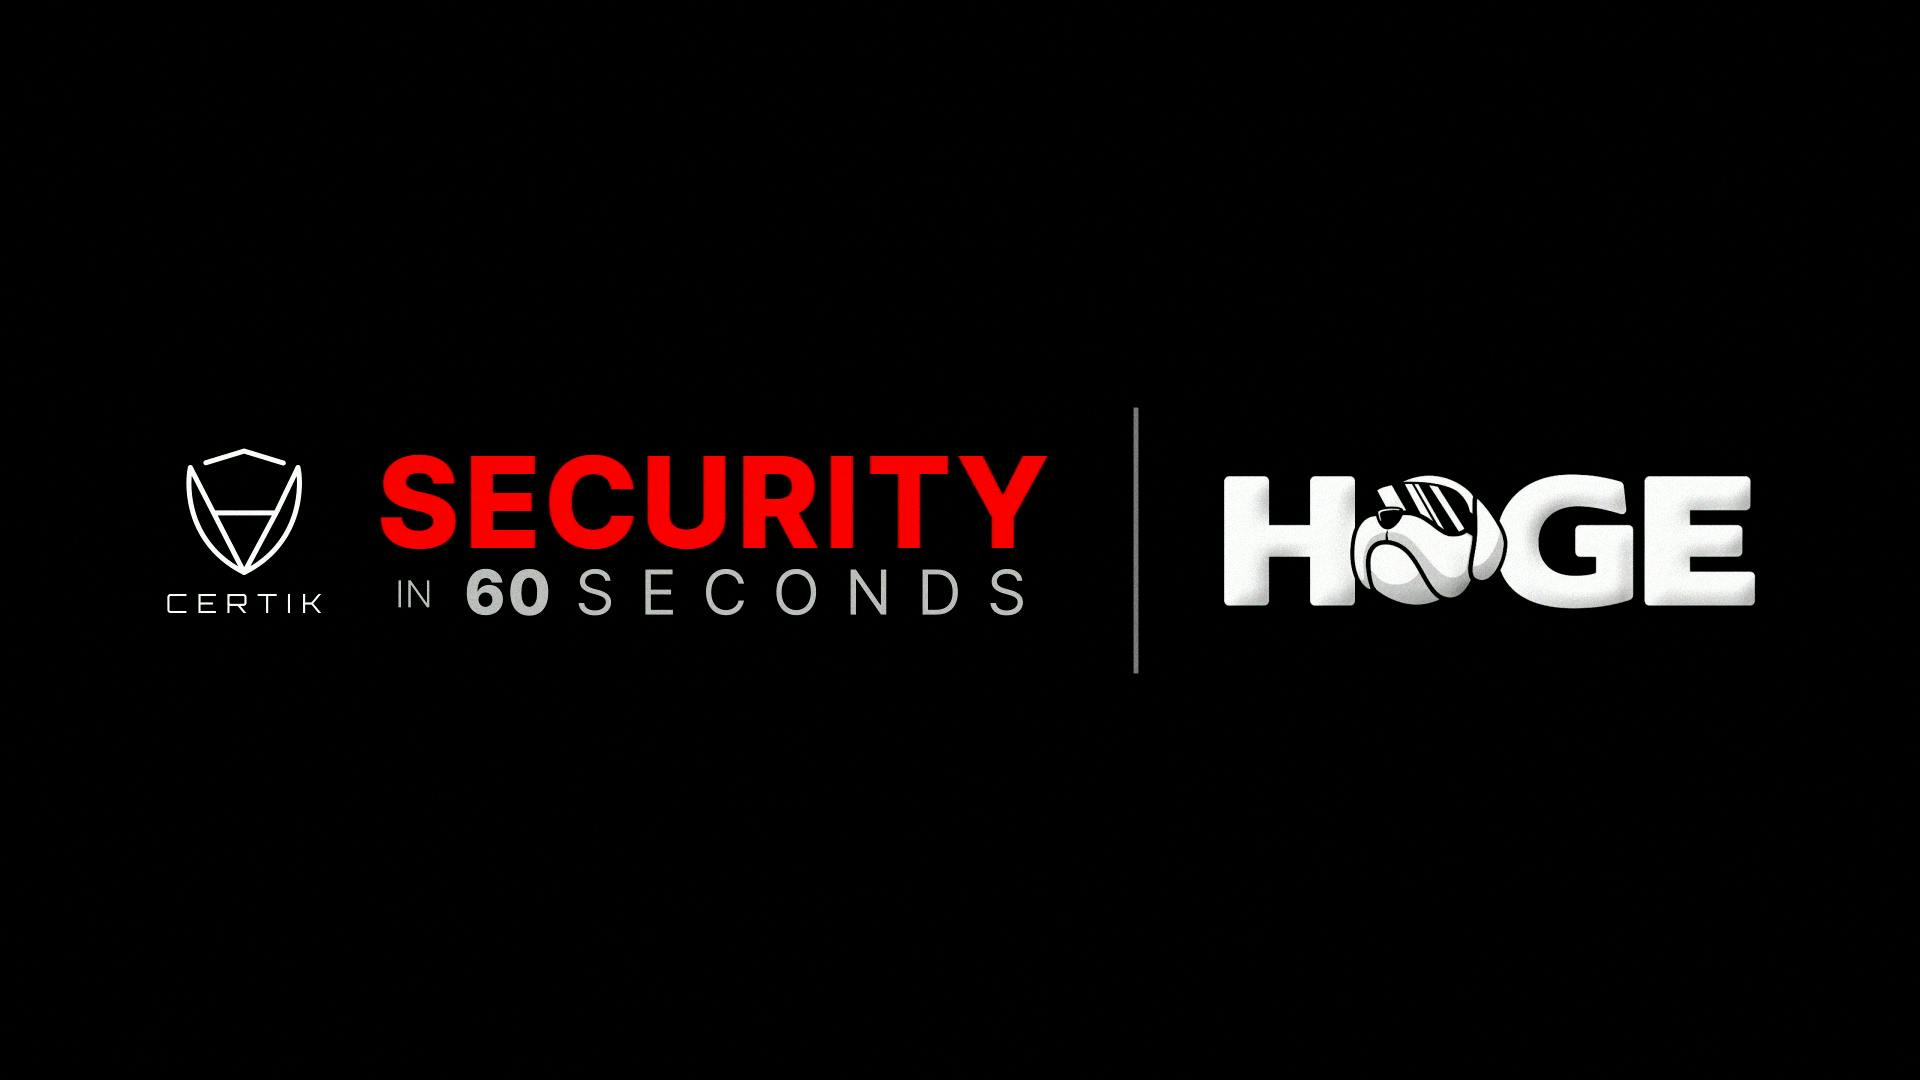 Security in 60 Seconds - Hoge